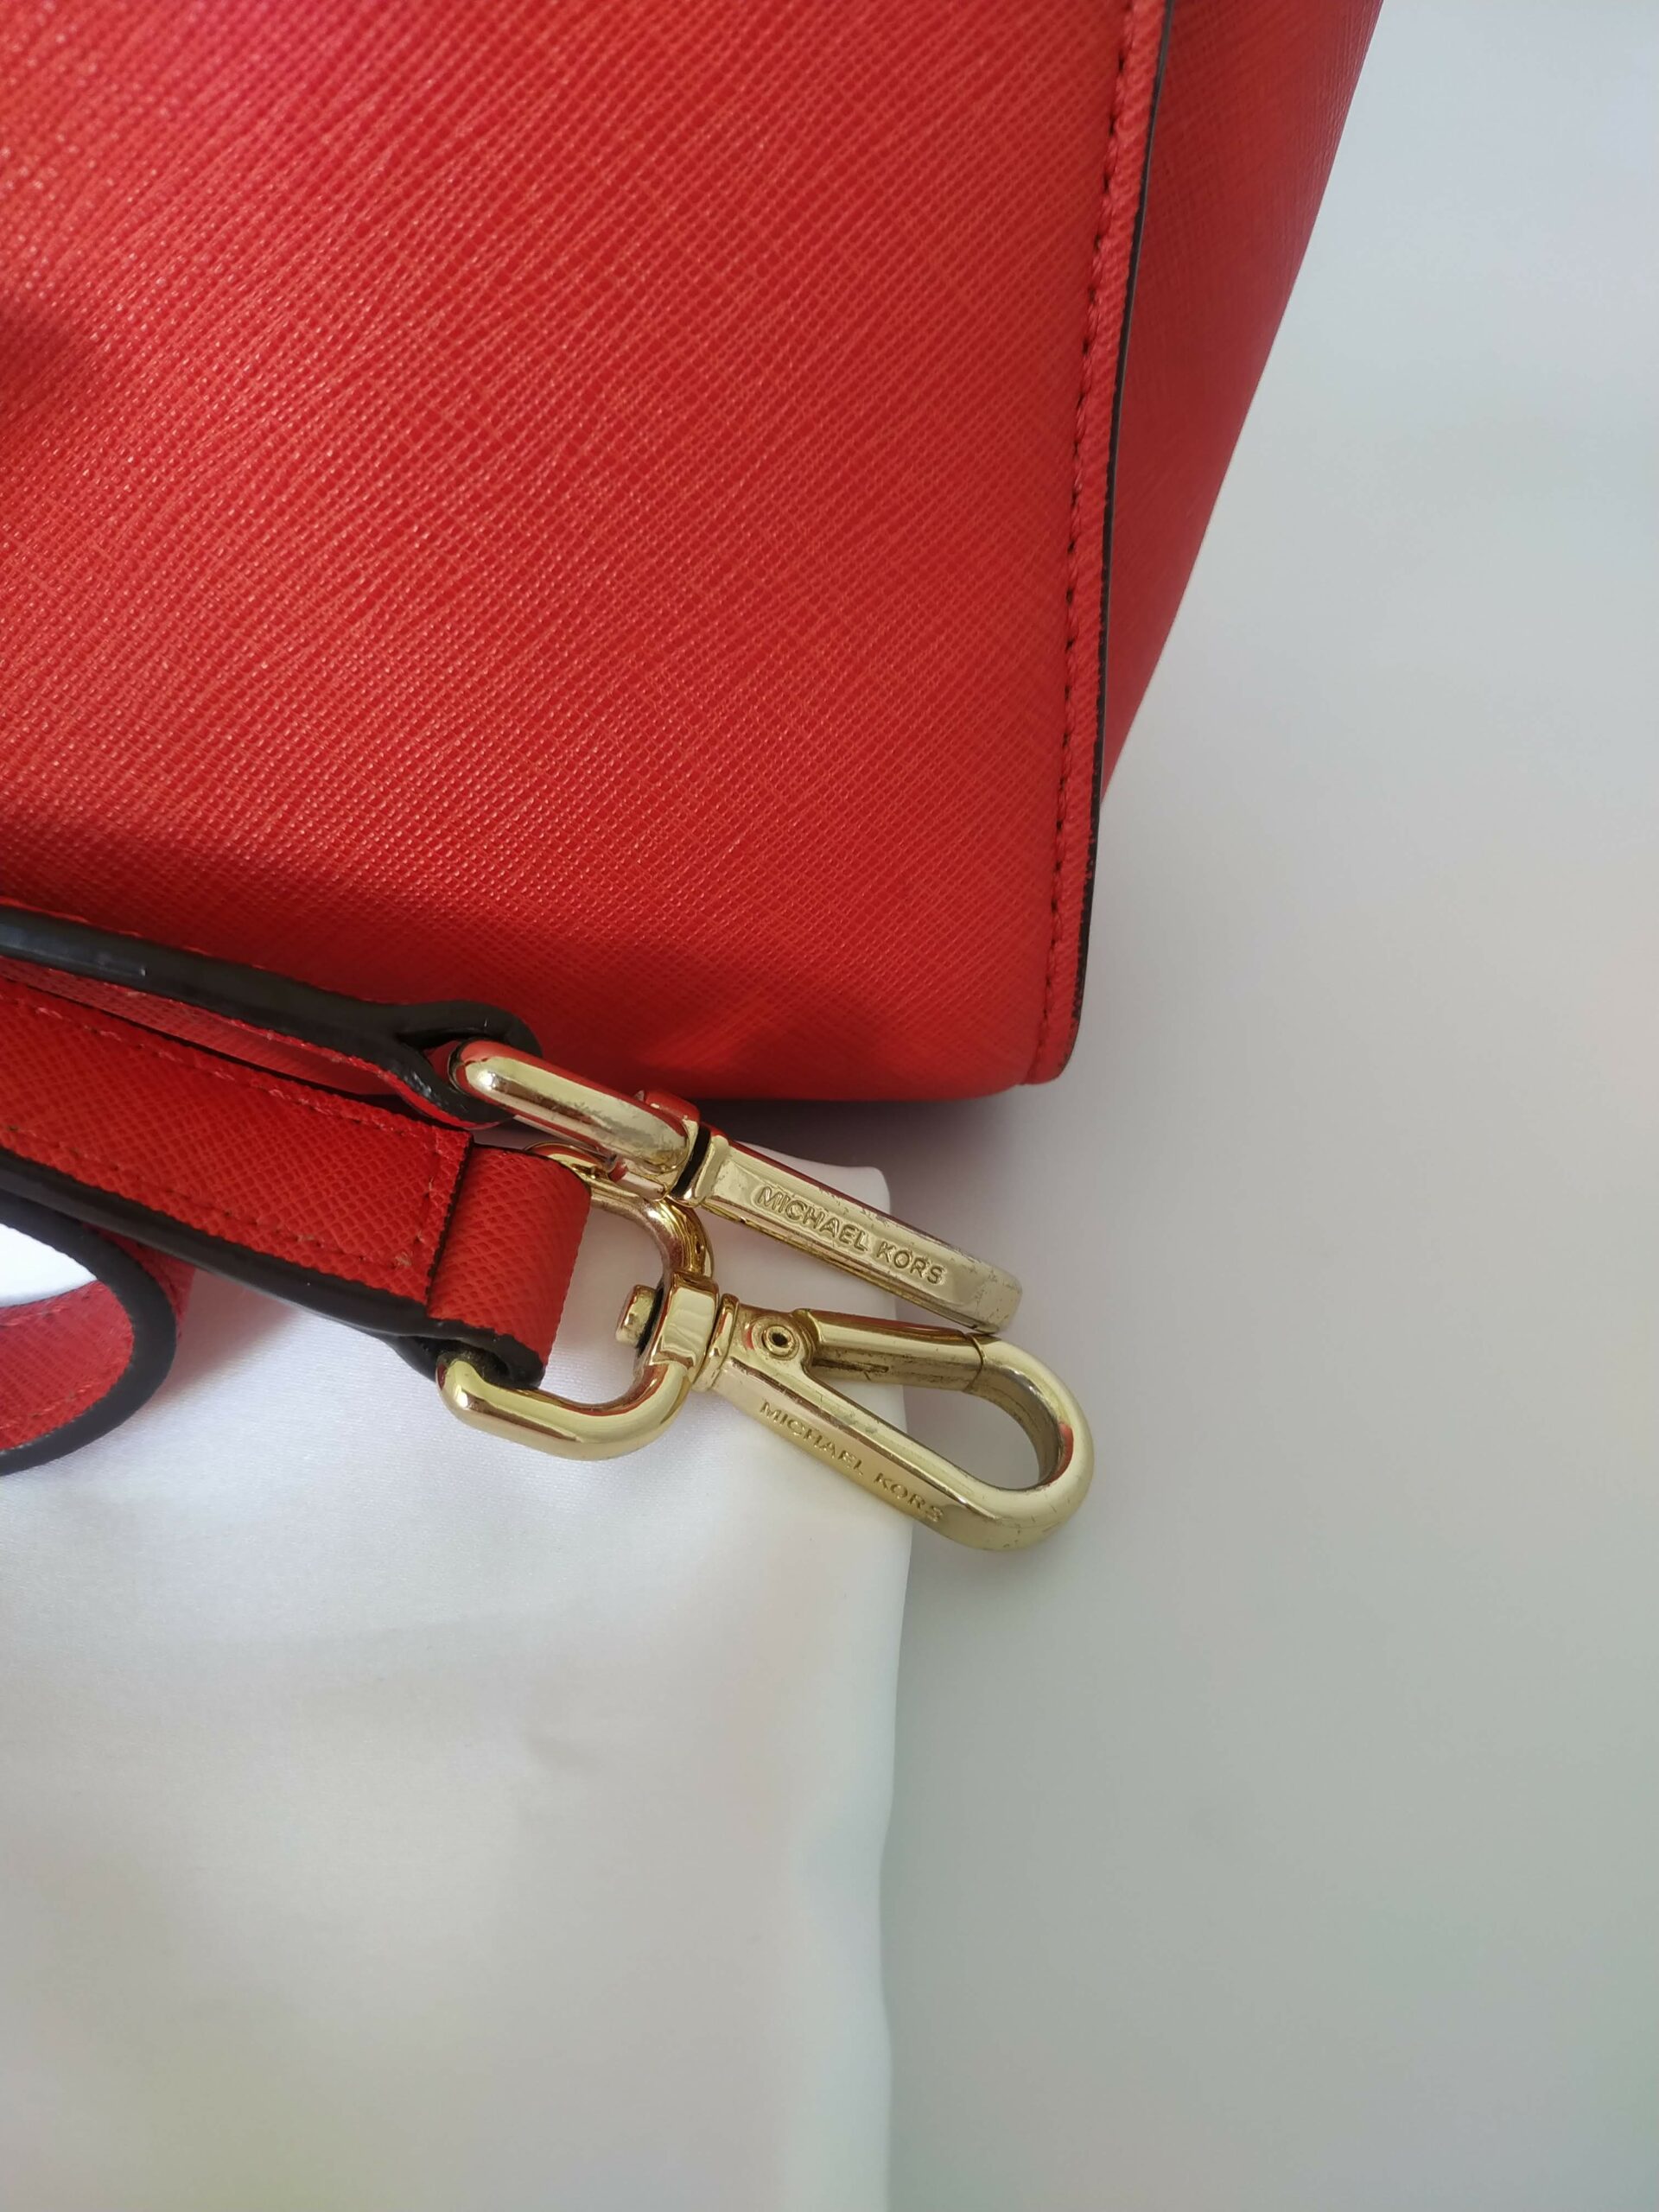 Michael Kors Selma Large Red Saffiano Leather - Earth Luxury